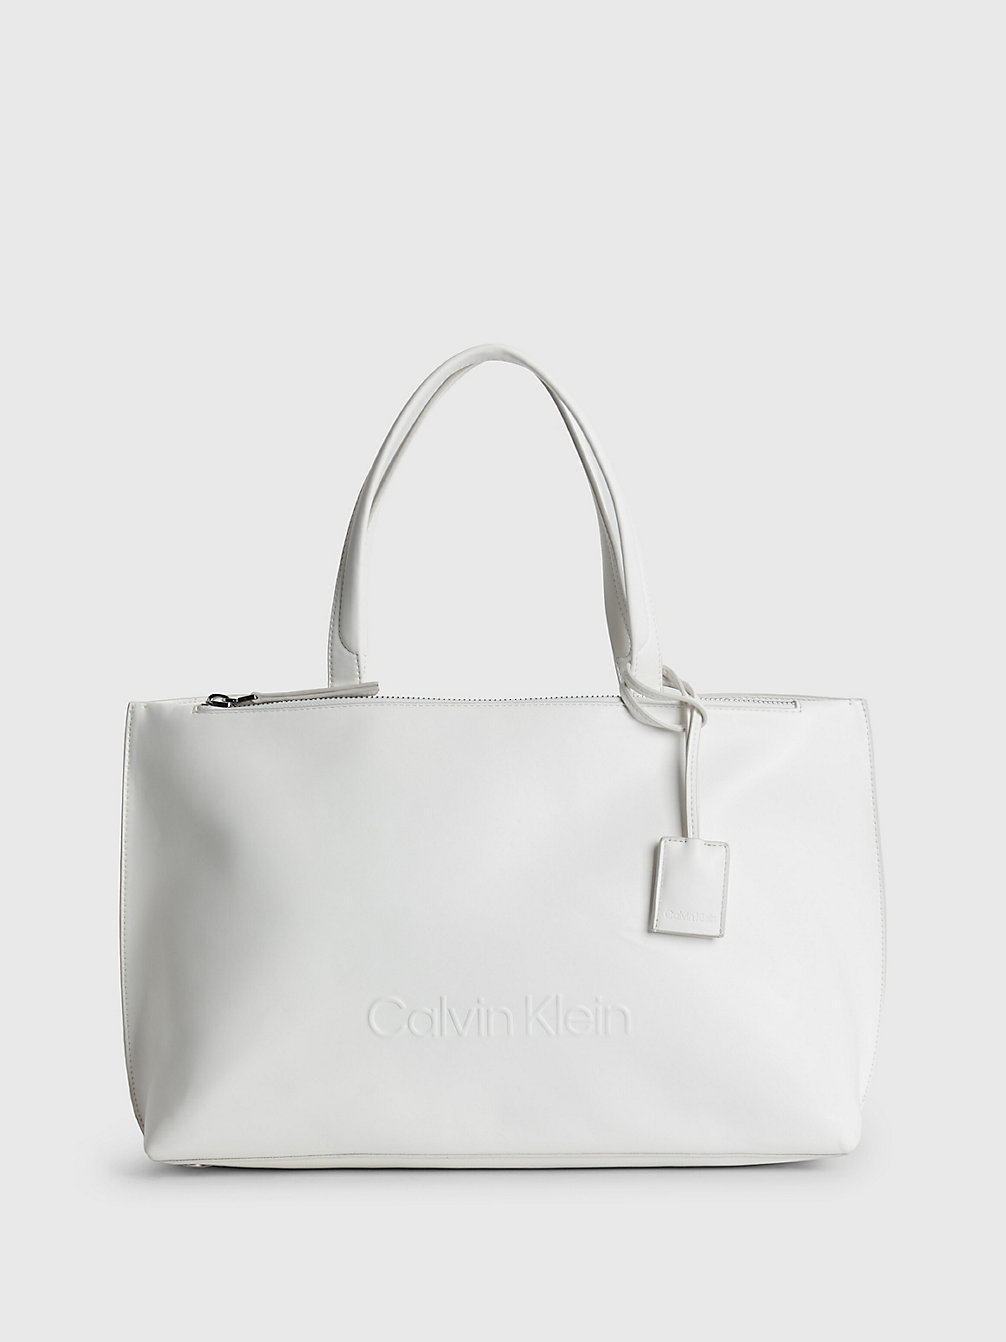 BRIGHT WHITE > Tote-Bag Aus Recyceltem Material > undefined Damen - Calvin Klein